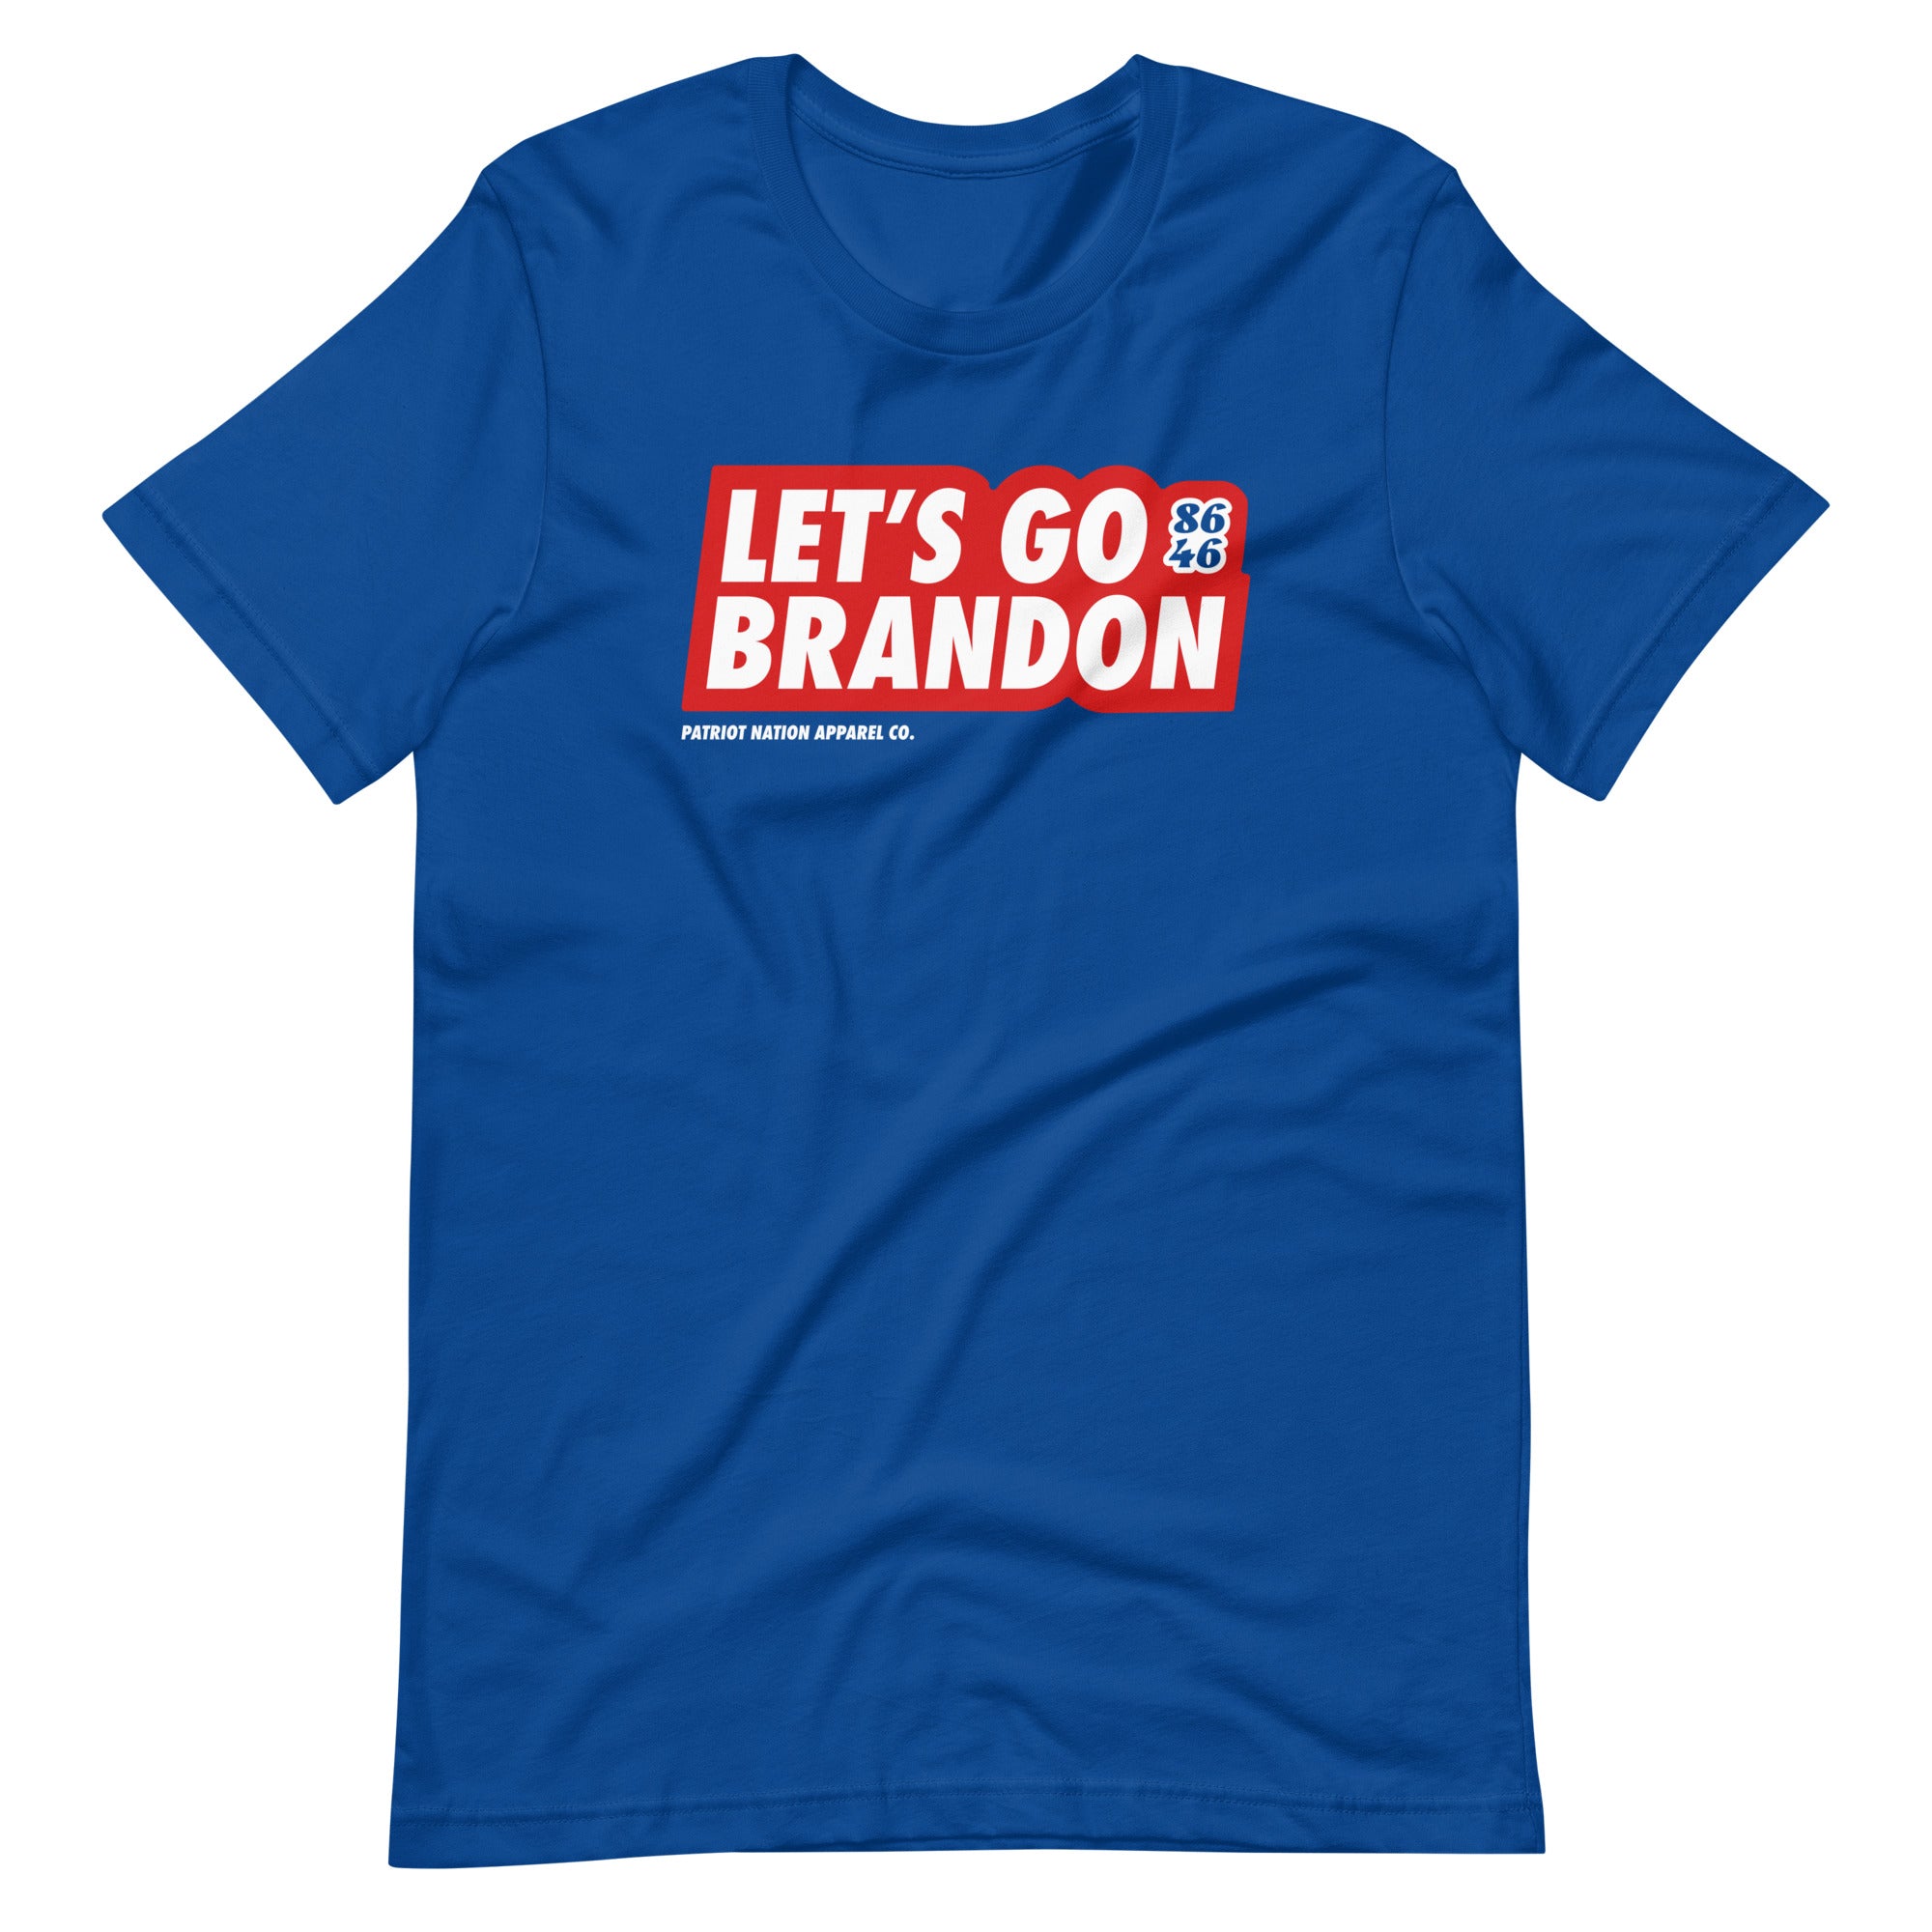 Let's Go Brandon T-shirt – Patriot Nation Apparel Co.